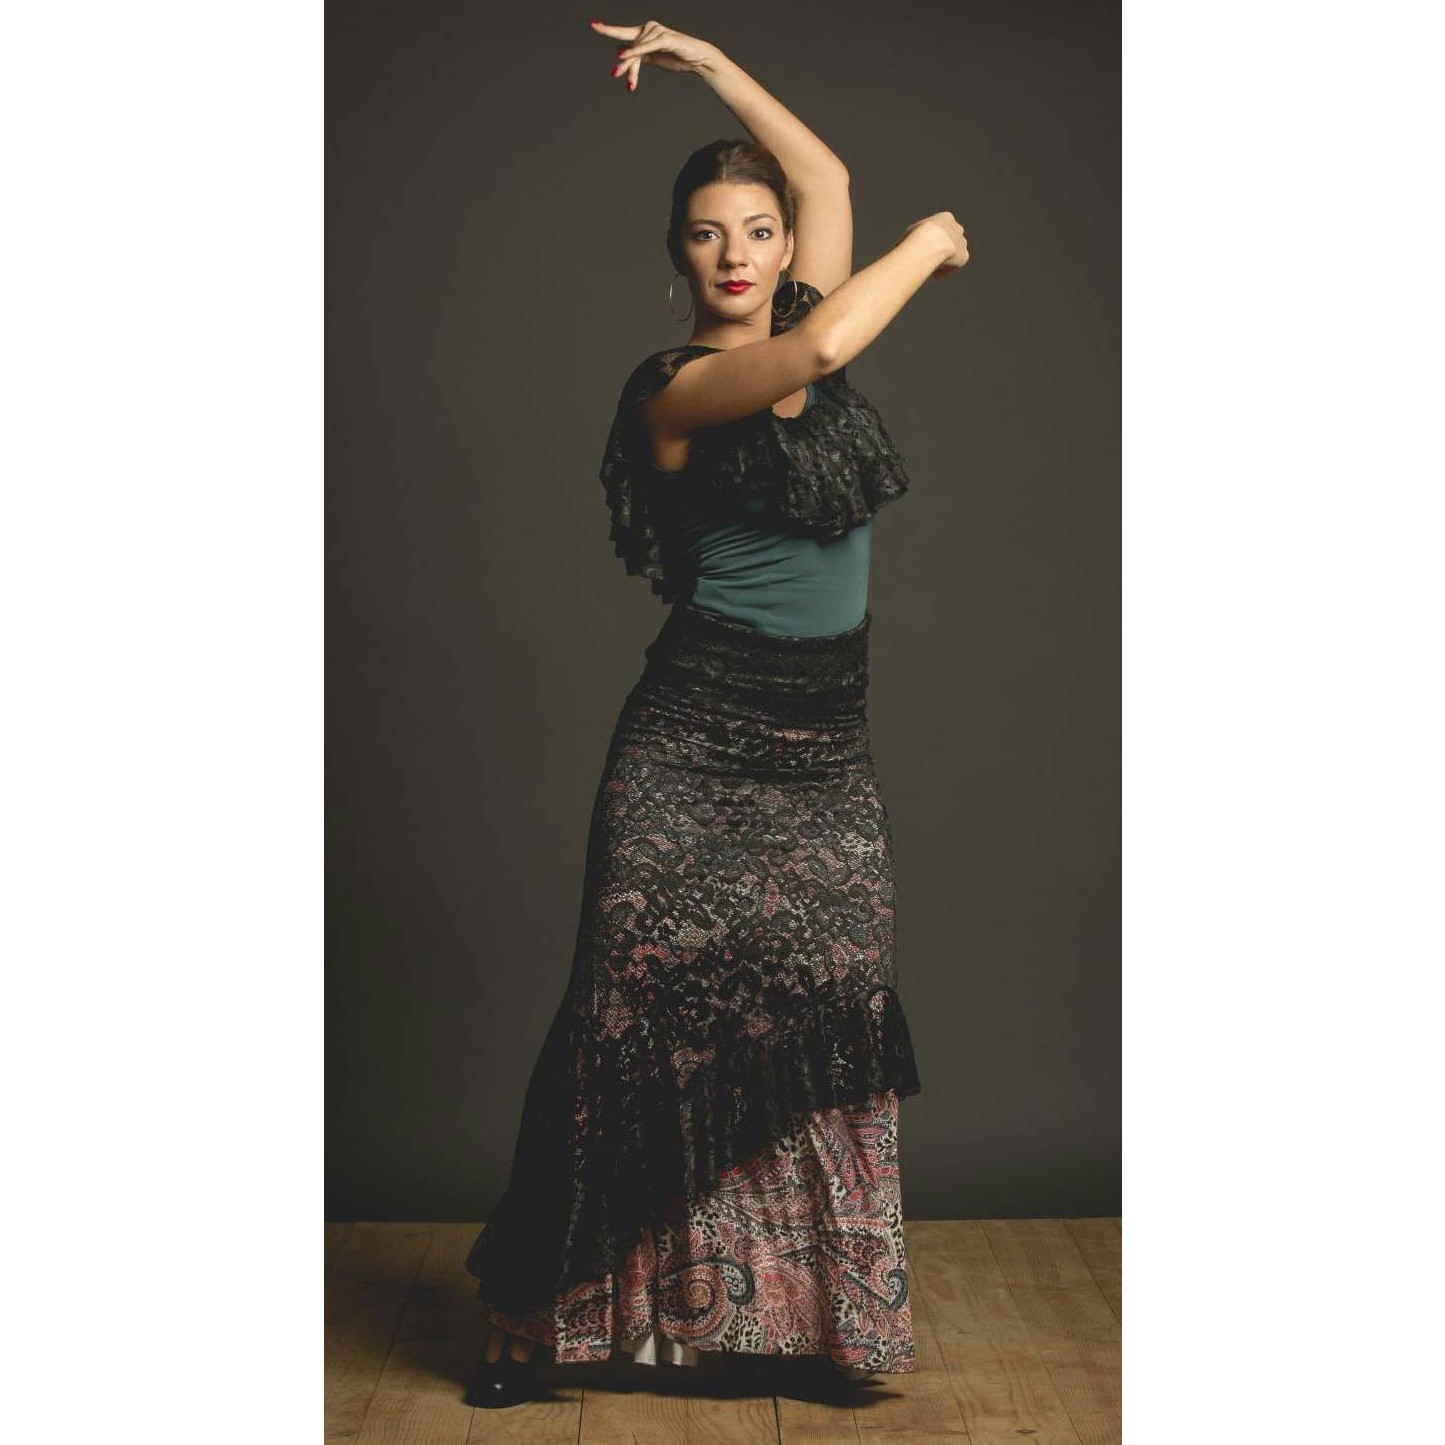 El Flamenco Vive, Falda Serrada 3918 - Español